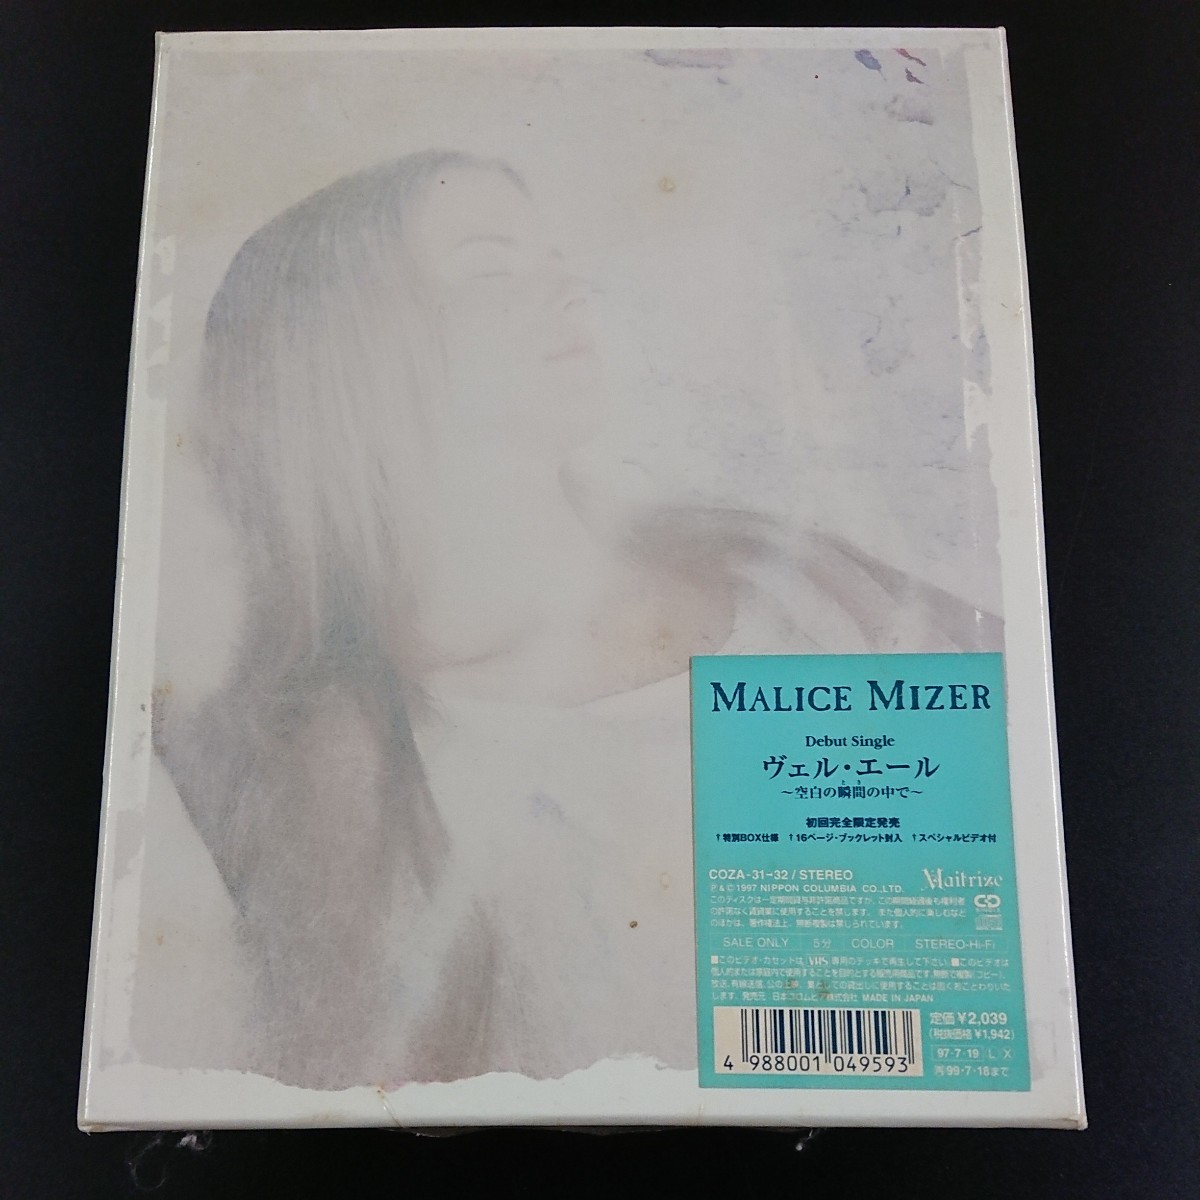 Yahoo!オークション -「マリスミゼル cd」(MALICE MIZER) (ま)の落札 